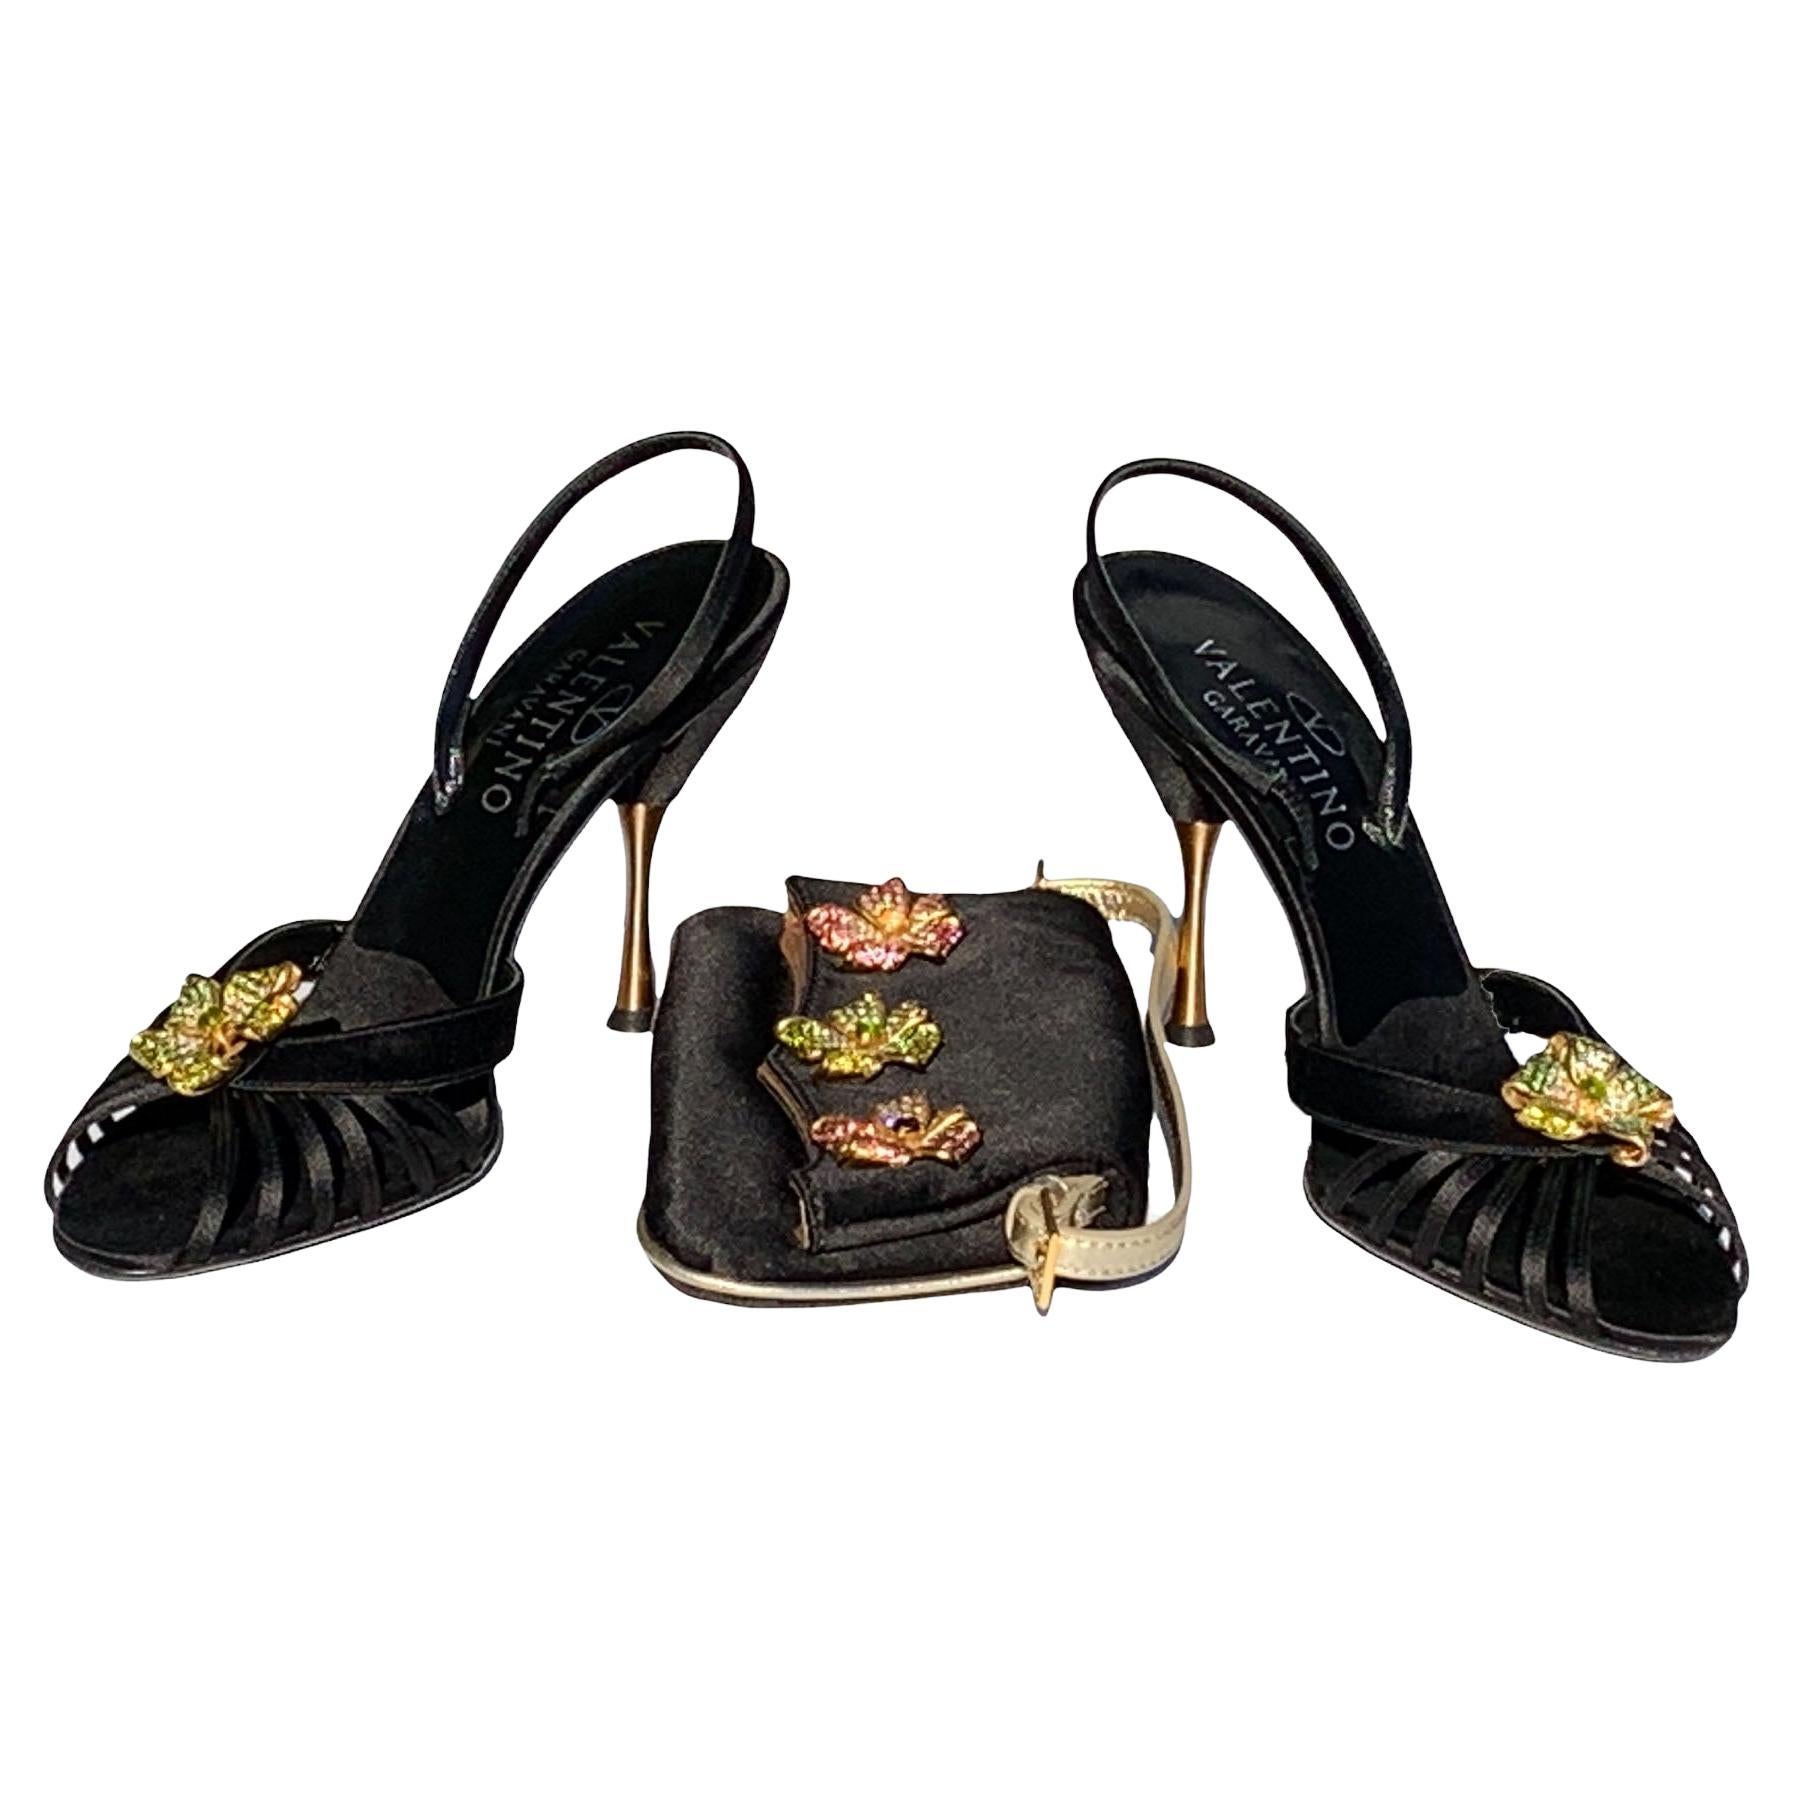 New Valentino Garavani 2006 Black Jeweled Shoes Sandals 38.5 + Matching Clutch 